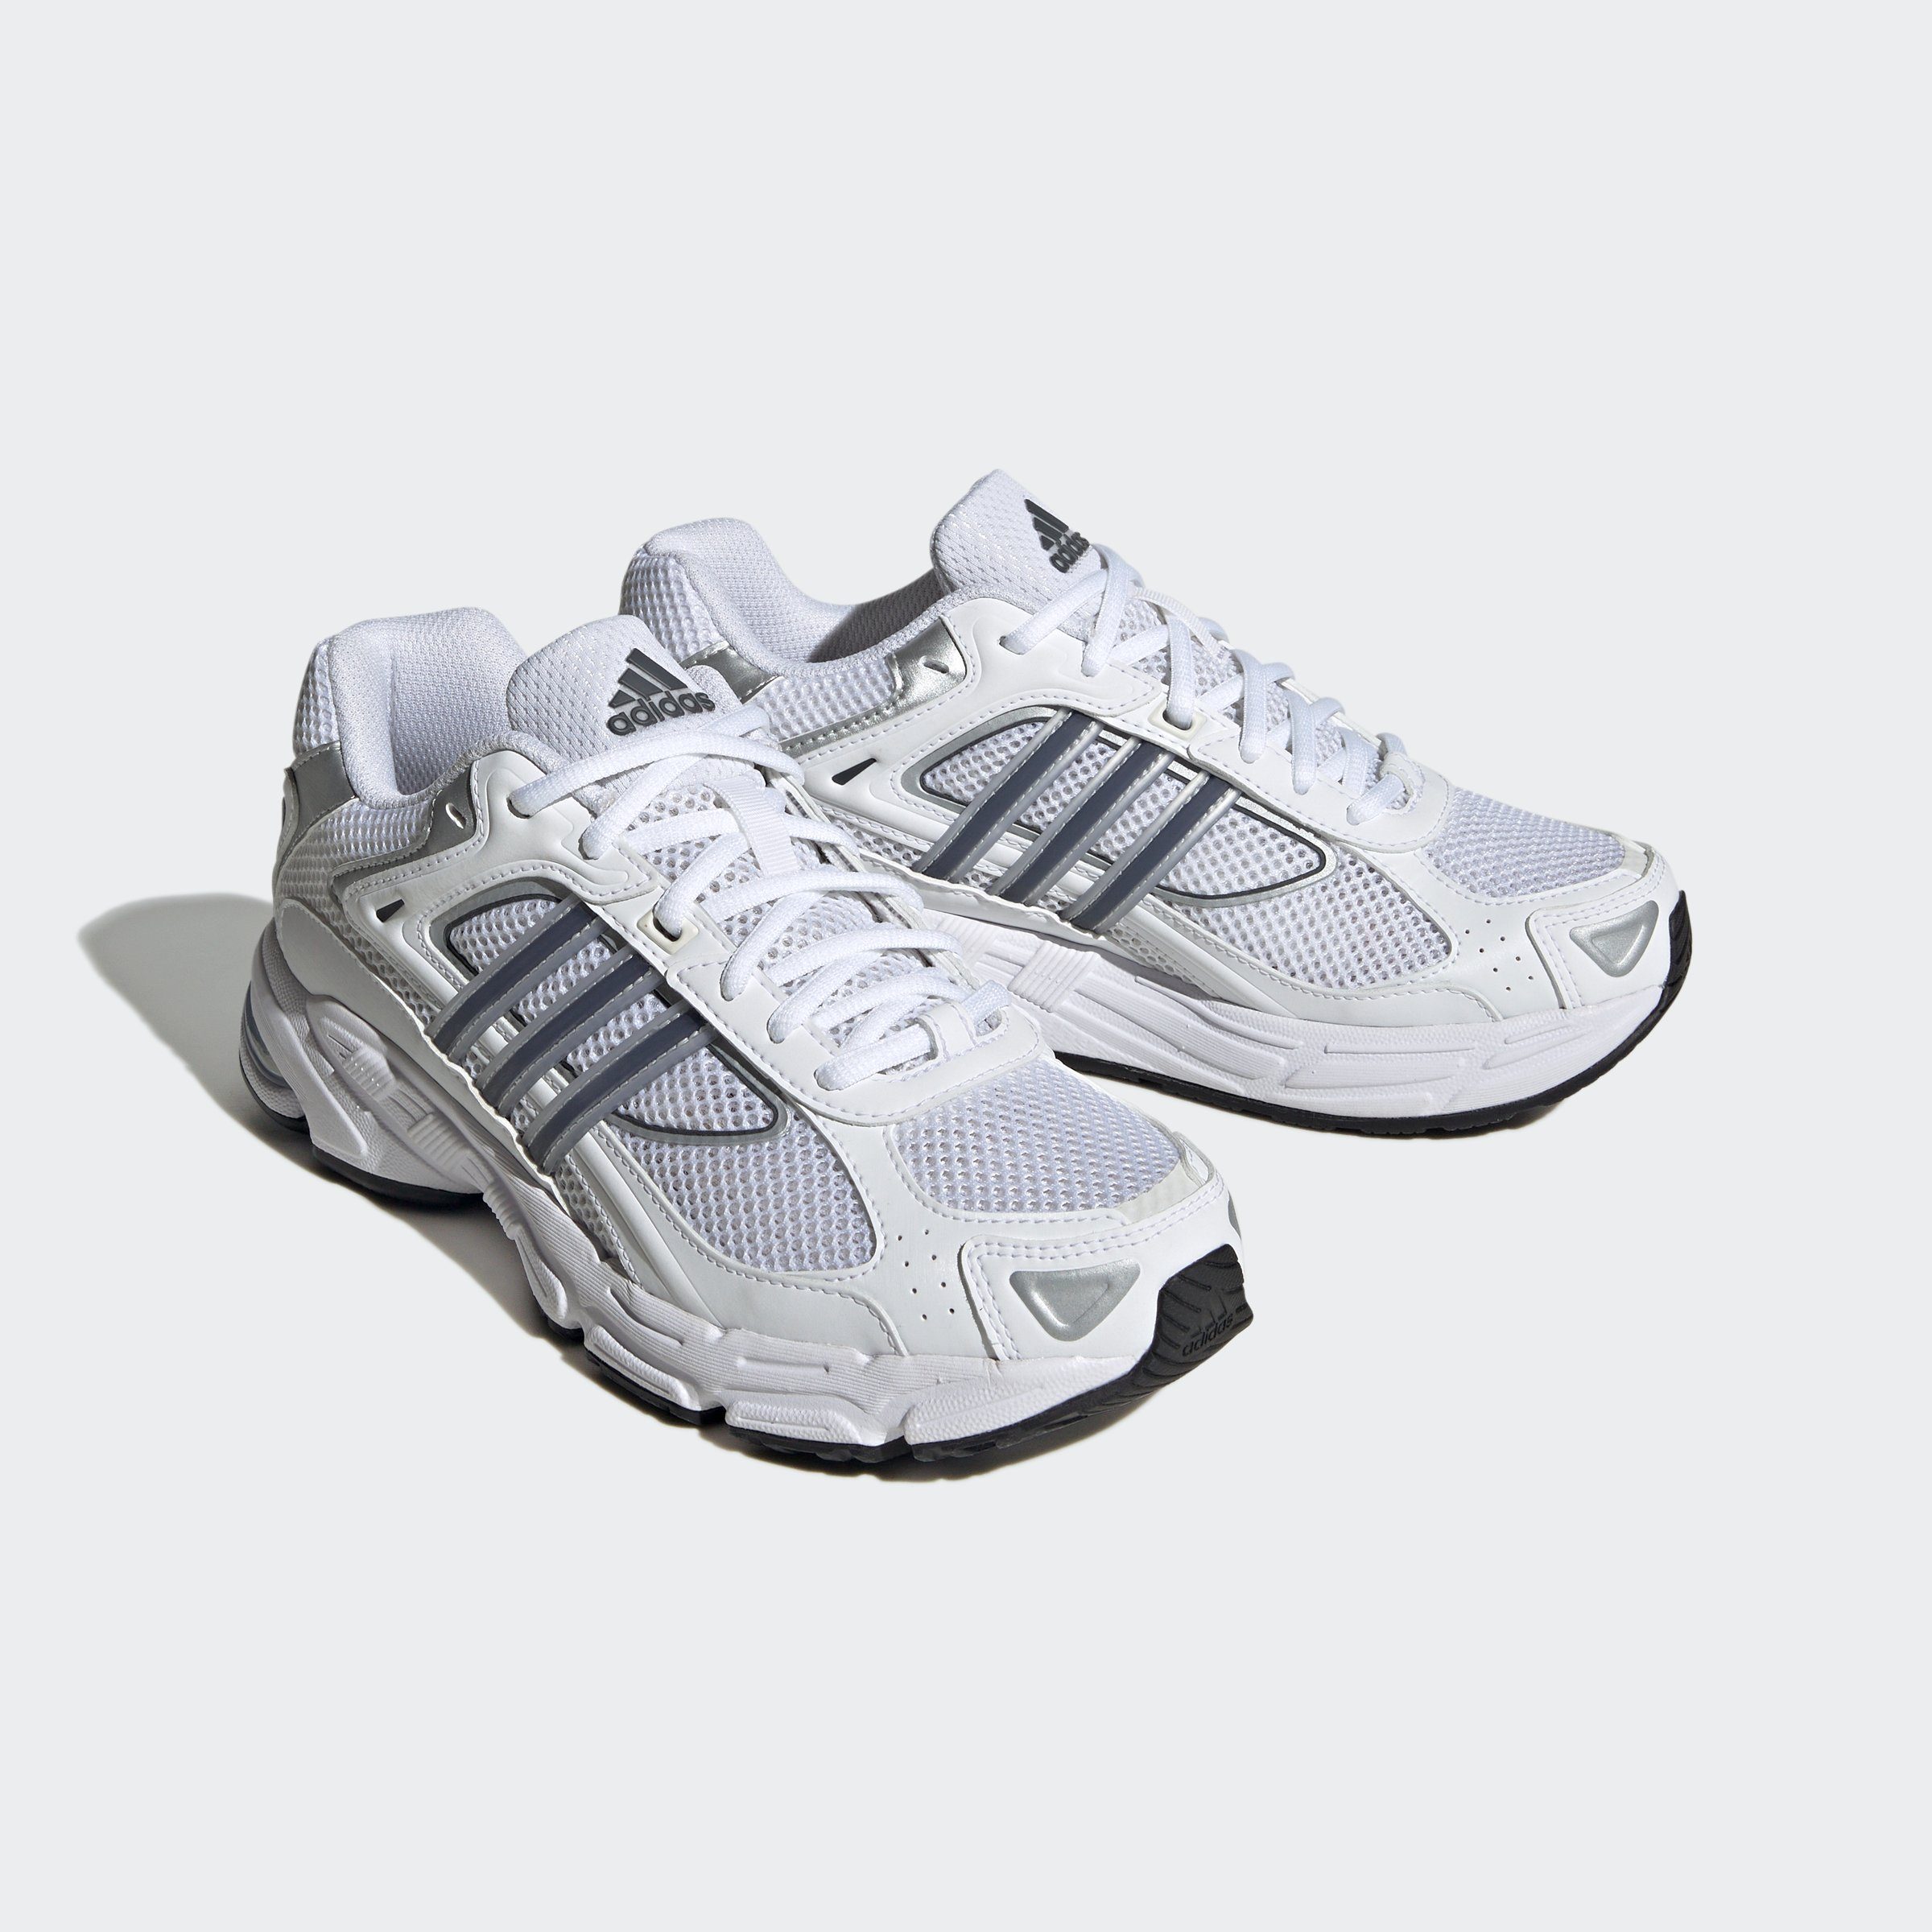 Five adidas RESPONSE / Originals Black Sneaker Core / Cloud White Grey